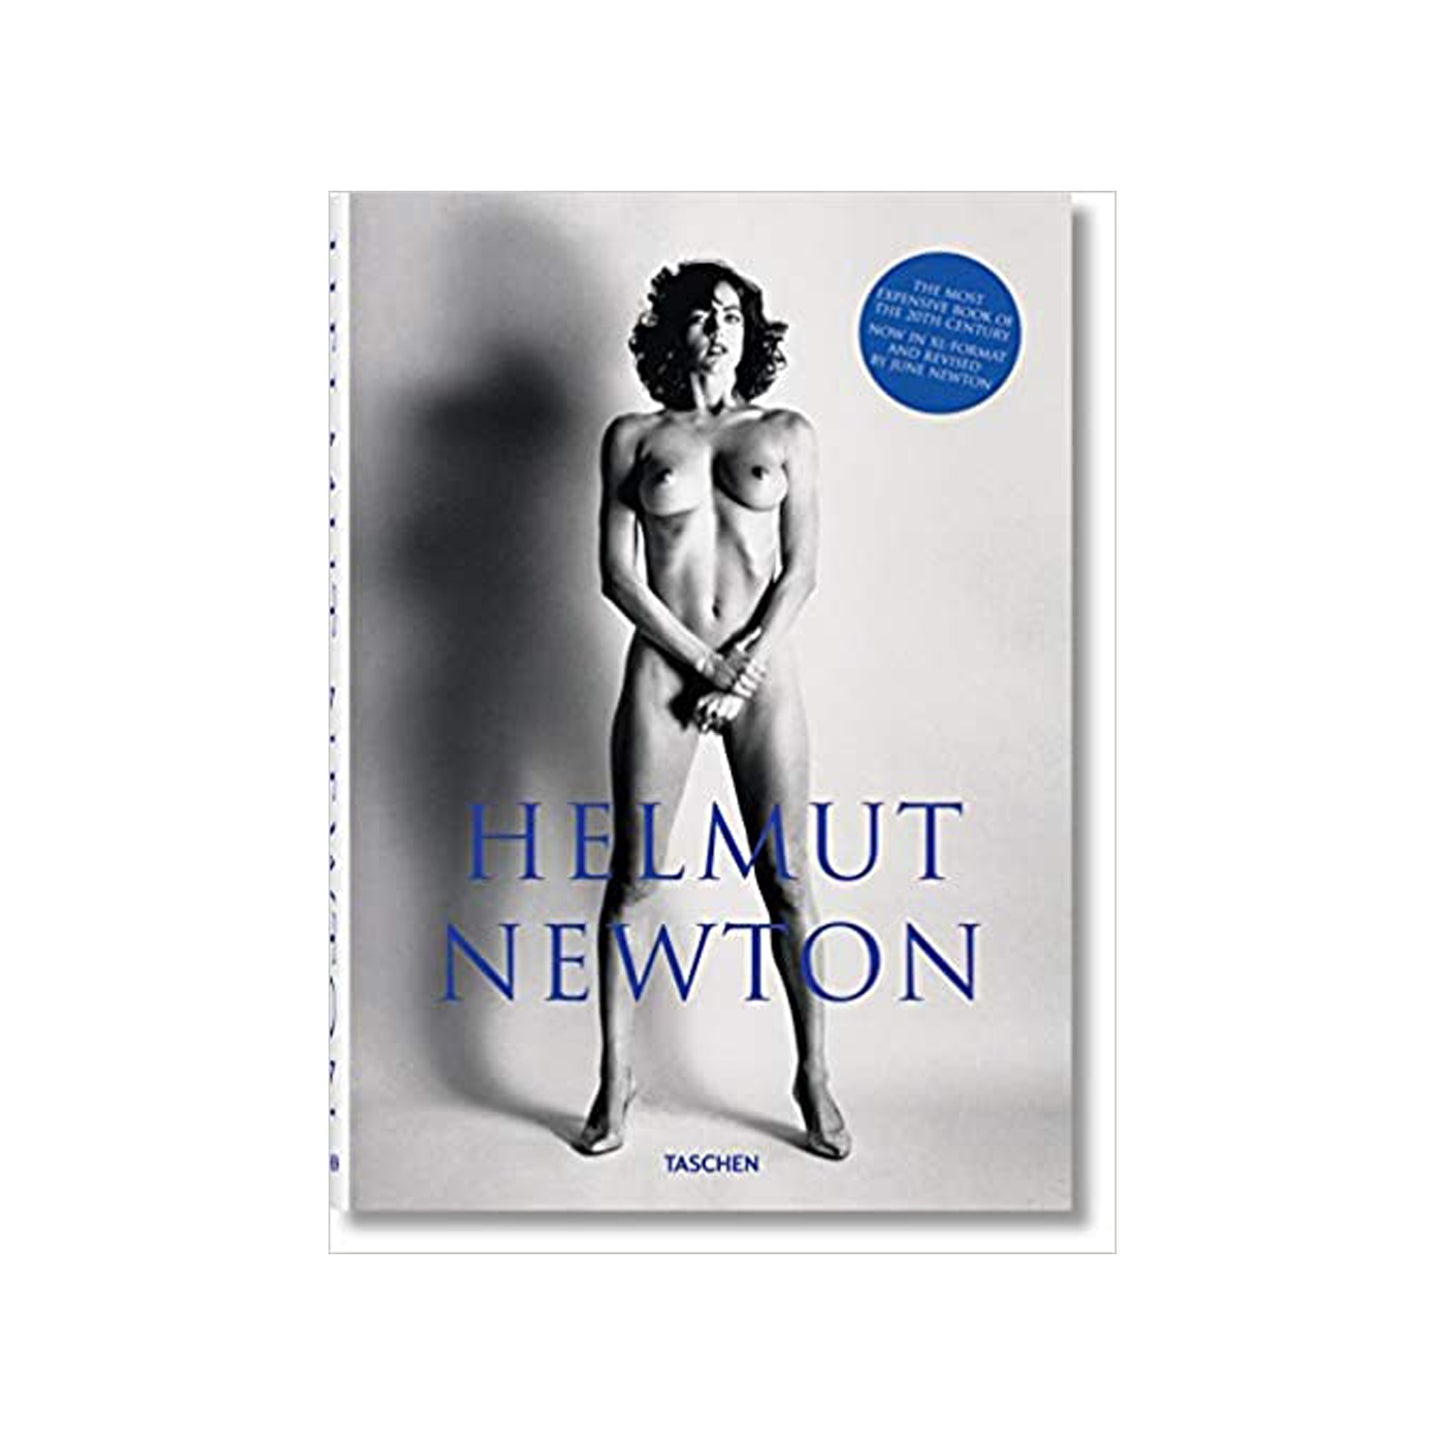 Helmut Newton. SUMO. Revised by June Newton Photo Museum Ireland